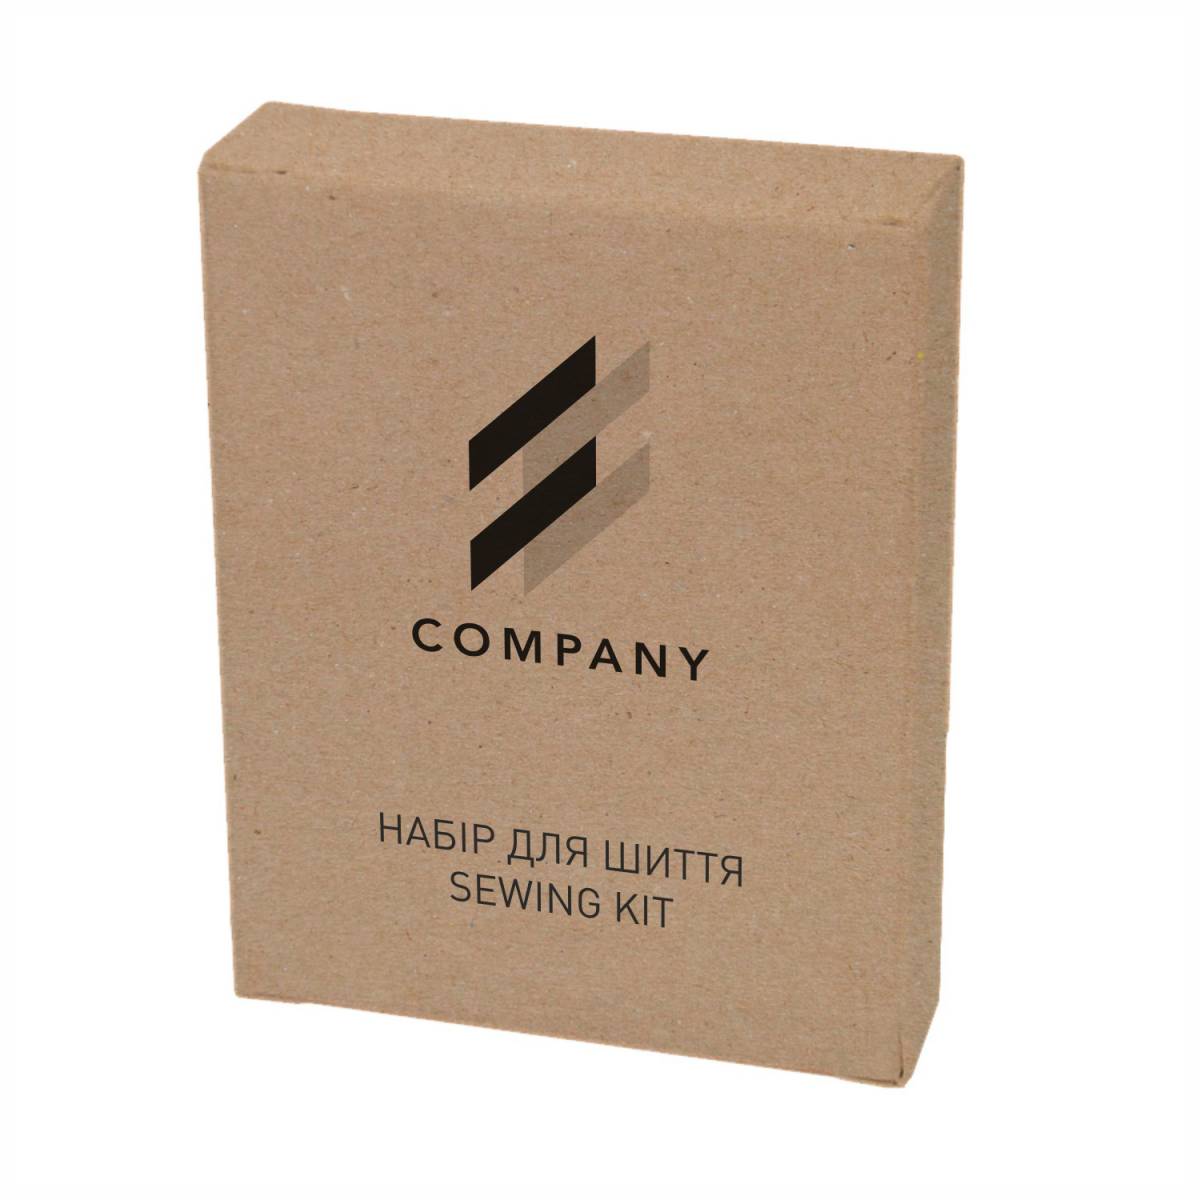 Швейный набор с логотипом заказчика, коробочка из крафт картона Cr2-SK6 HSG